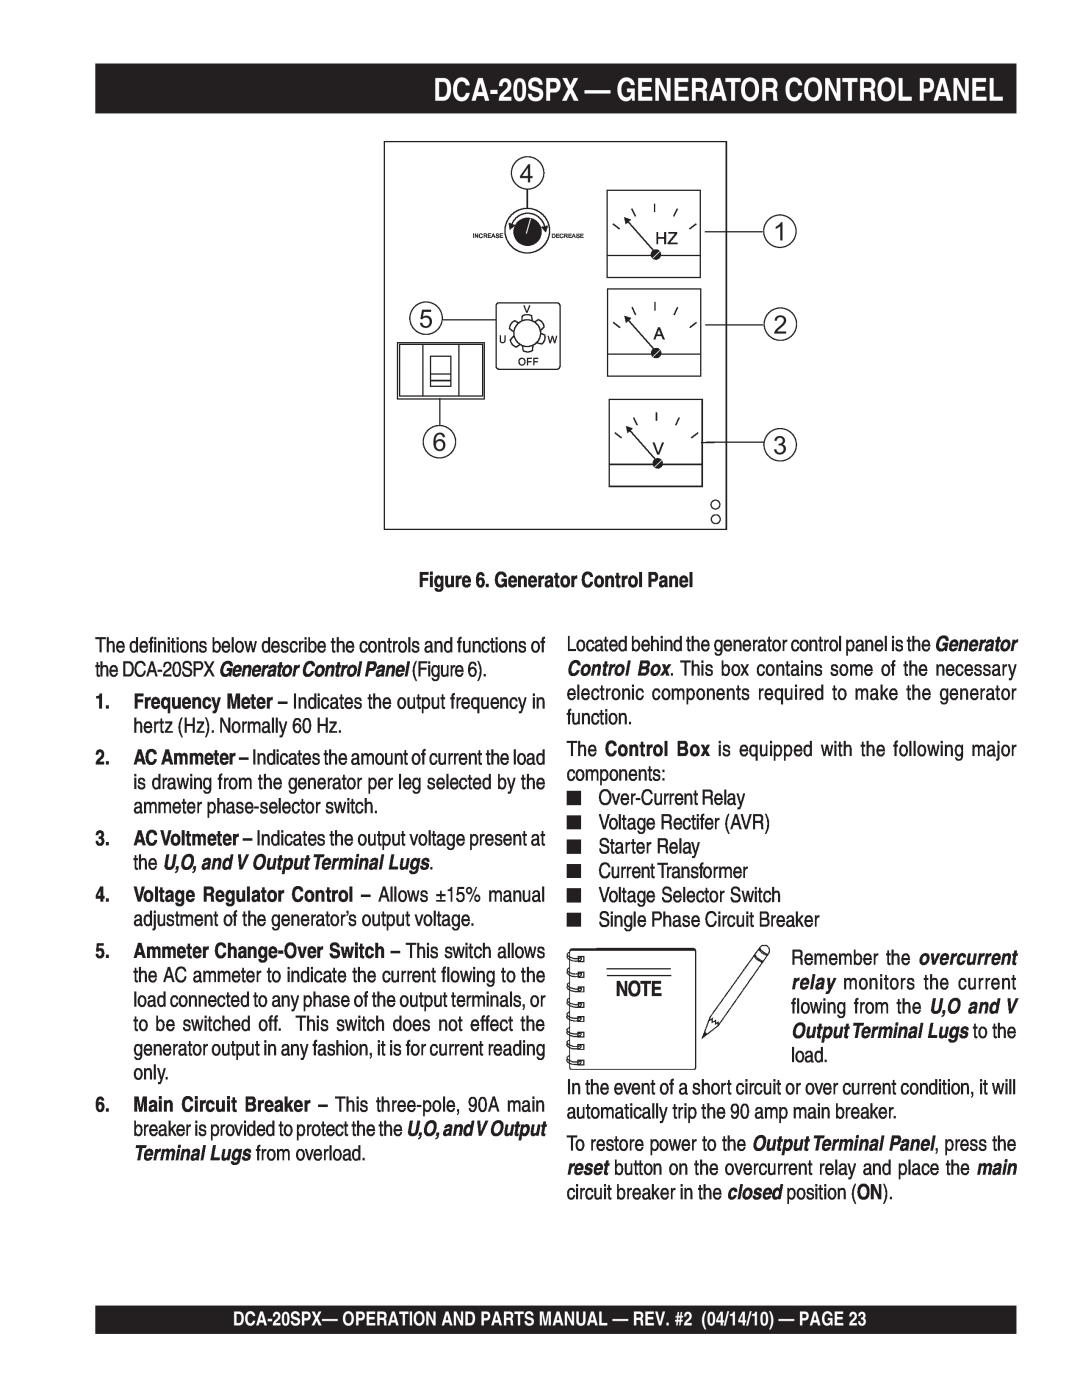 Multiquip operation manual DCA-20SPX - GENERATOR CONTROL PANEL, Generator Control Panel 